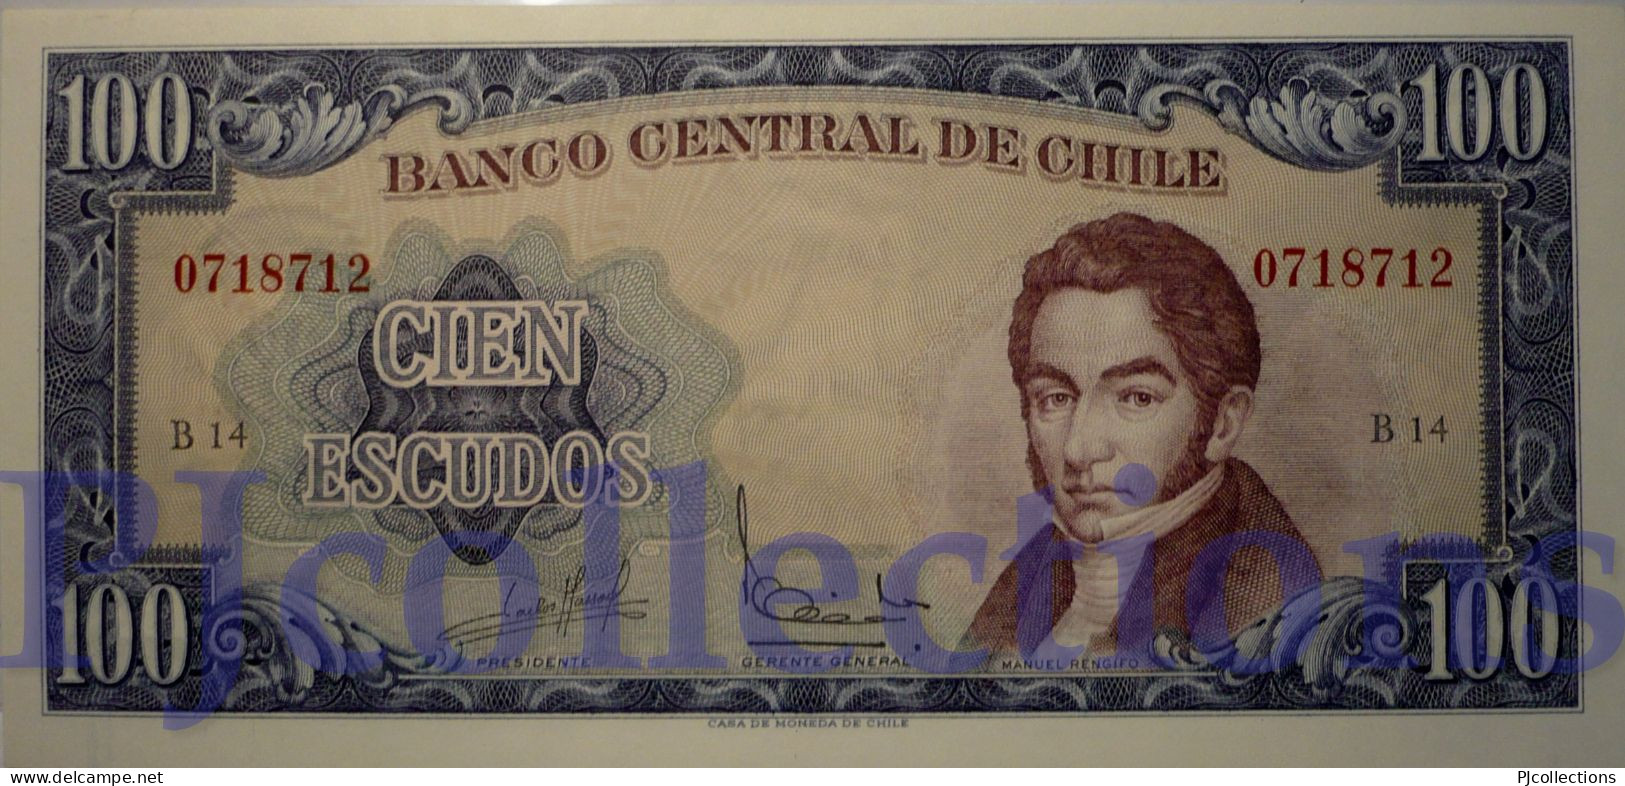 CHILE 100 PESOS 1962/75 PICK 141a UNC SERIE "B" SIG. MASSAD - IBANEZ - Cile